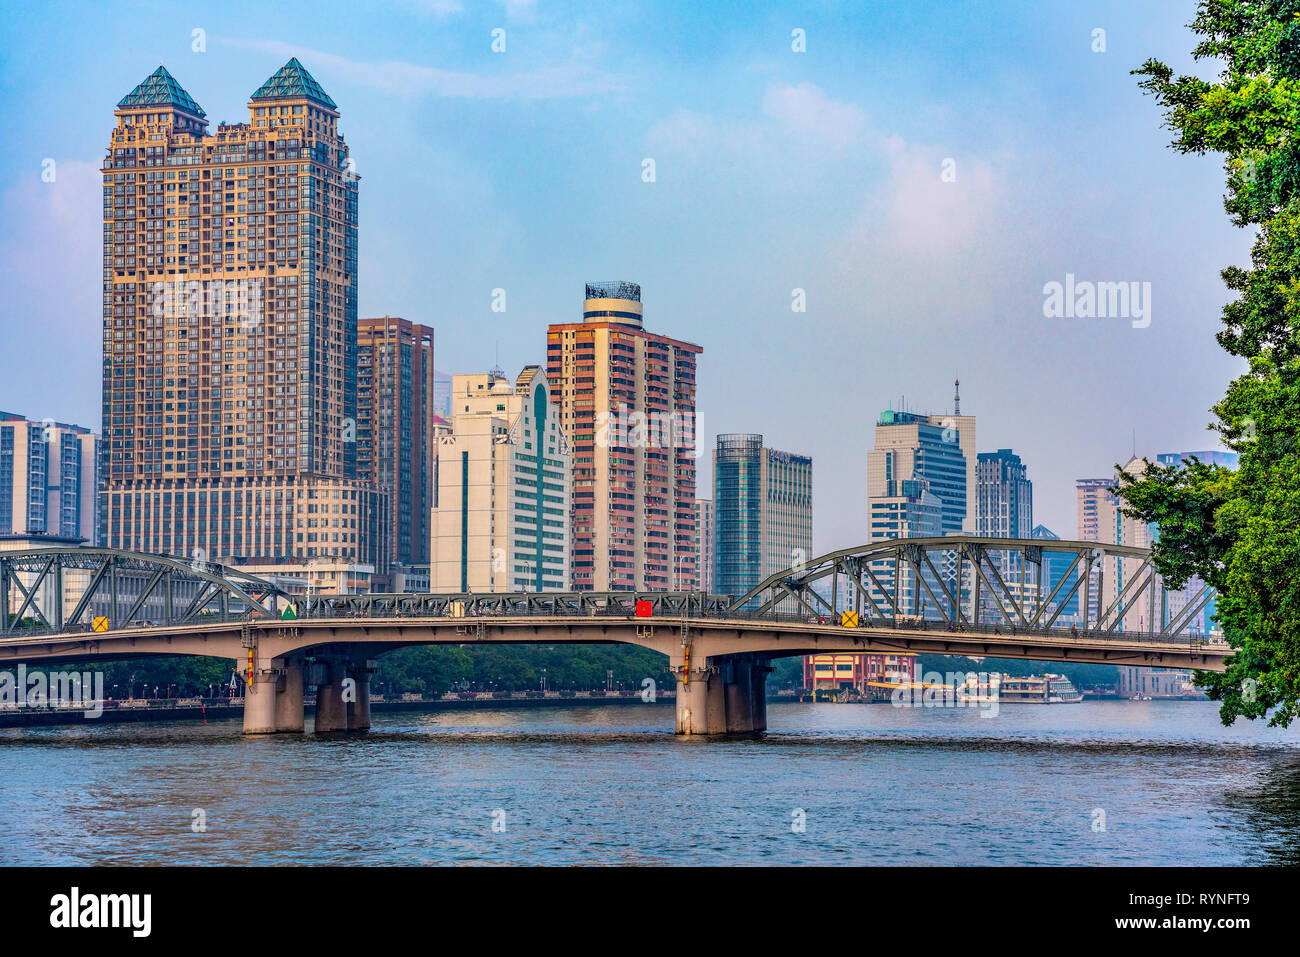 GUANGZHOU, Cina - 26 ottobre: vista del Ponte di Haizhu e centro città edifici lungo il Fiume Pearl su ottobre 26, 2018 in Guangzhou Foto Stock